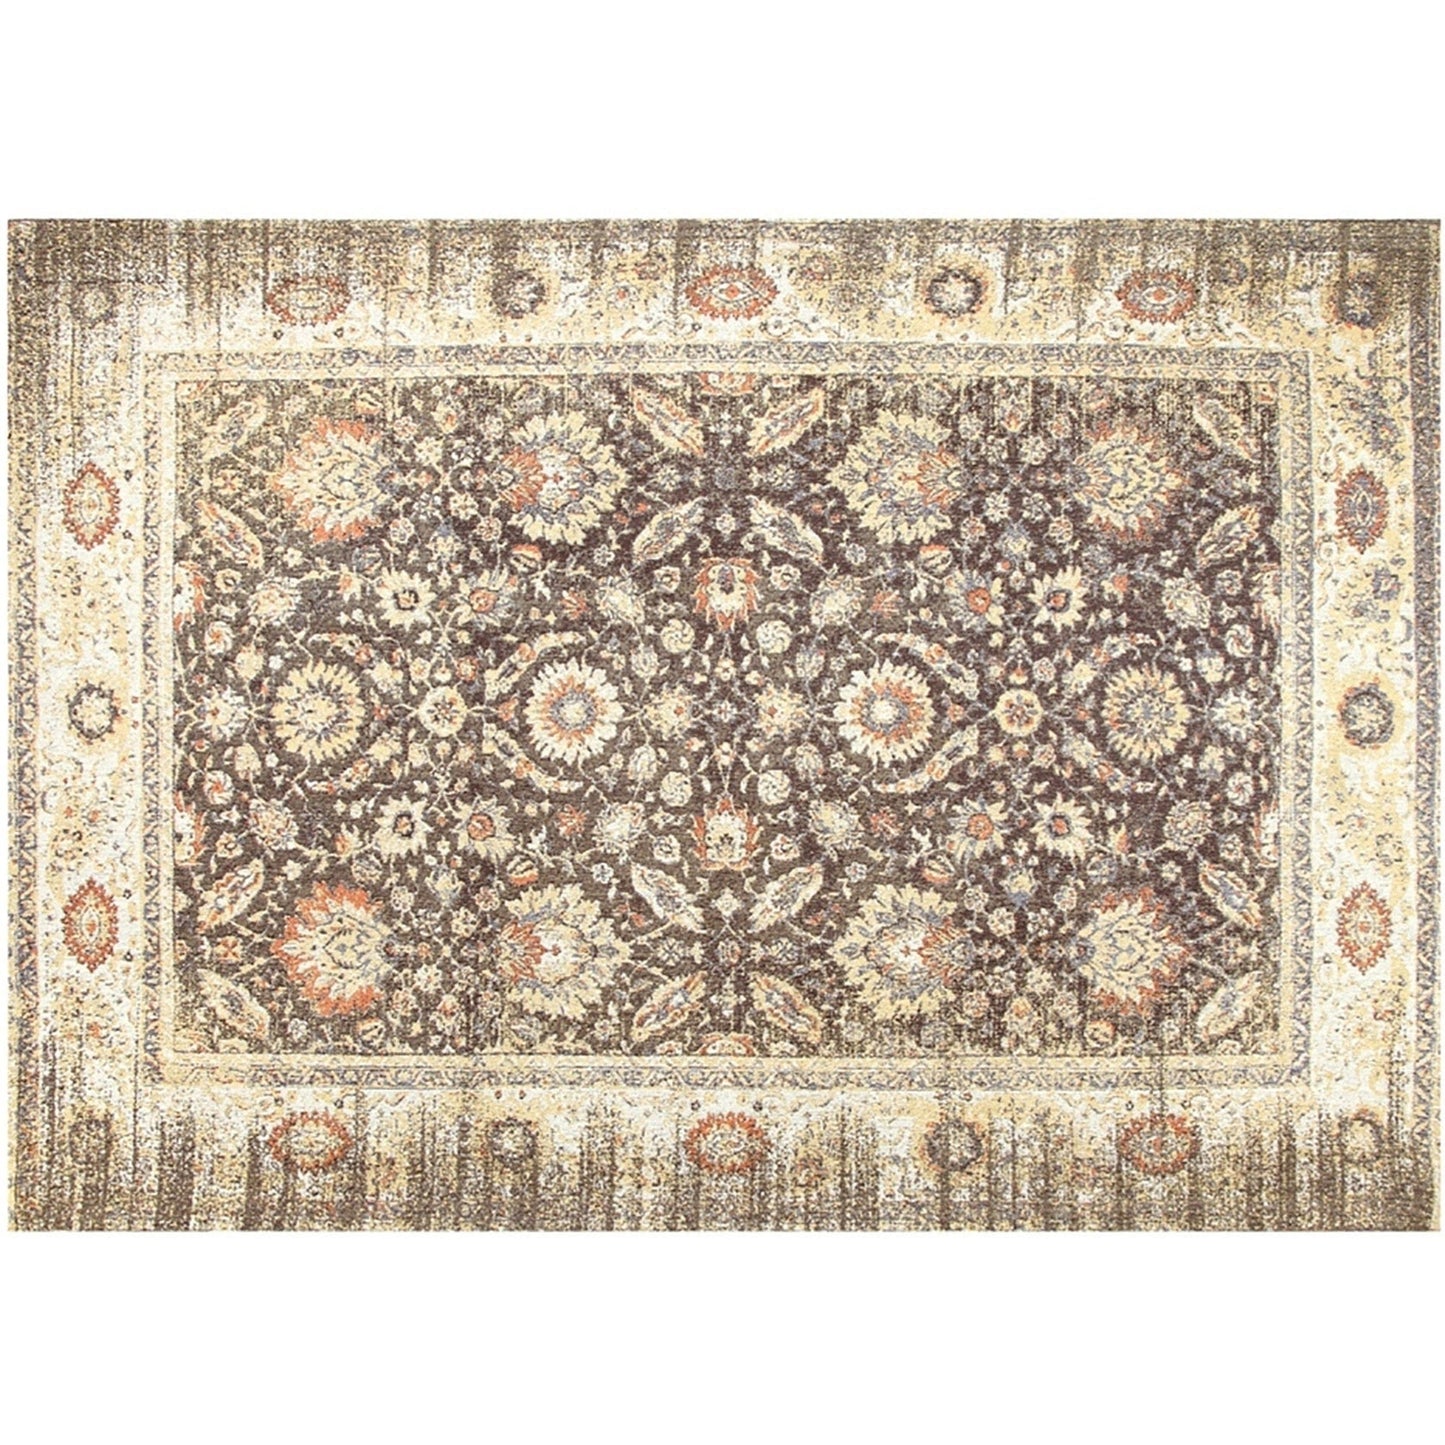 Woven Carpet, 4x6 feet, Warm Grey, 10% Off